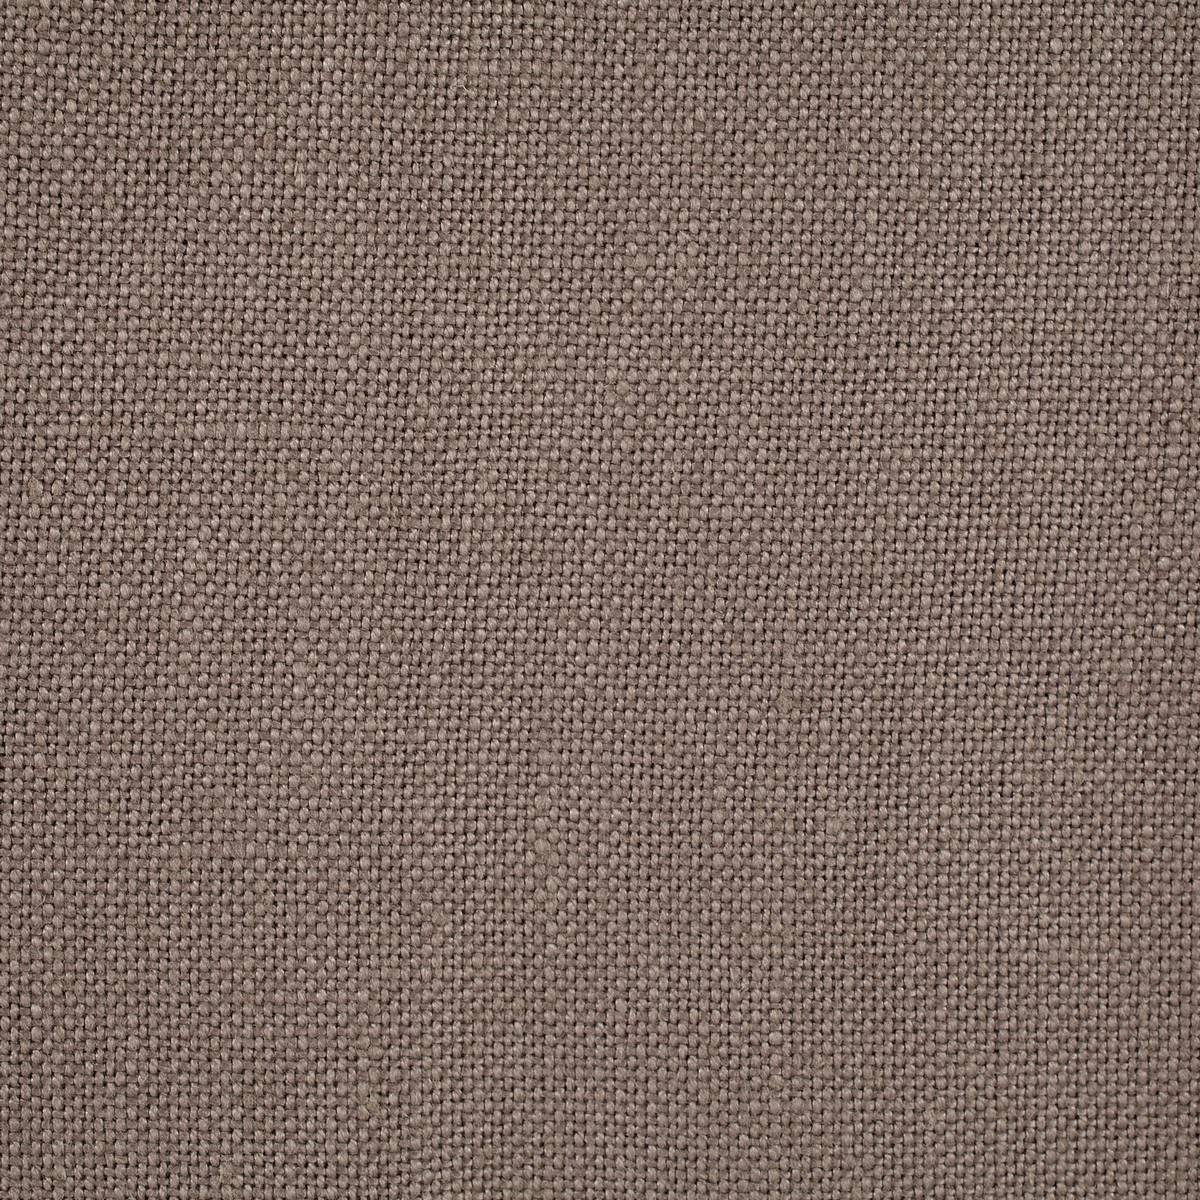 Malbec Stone Fabric by Sanderson